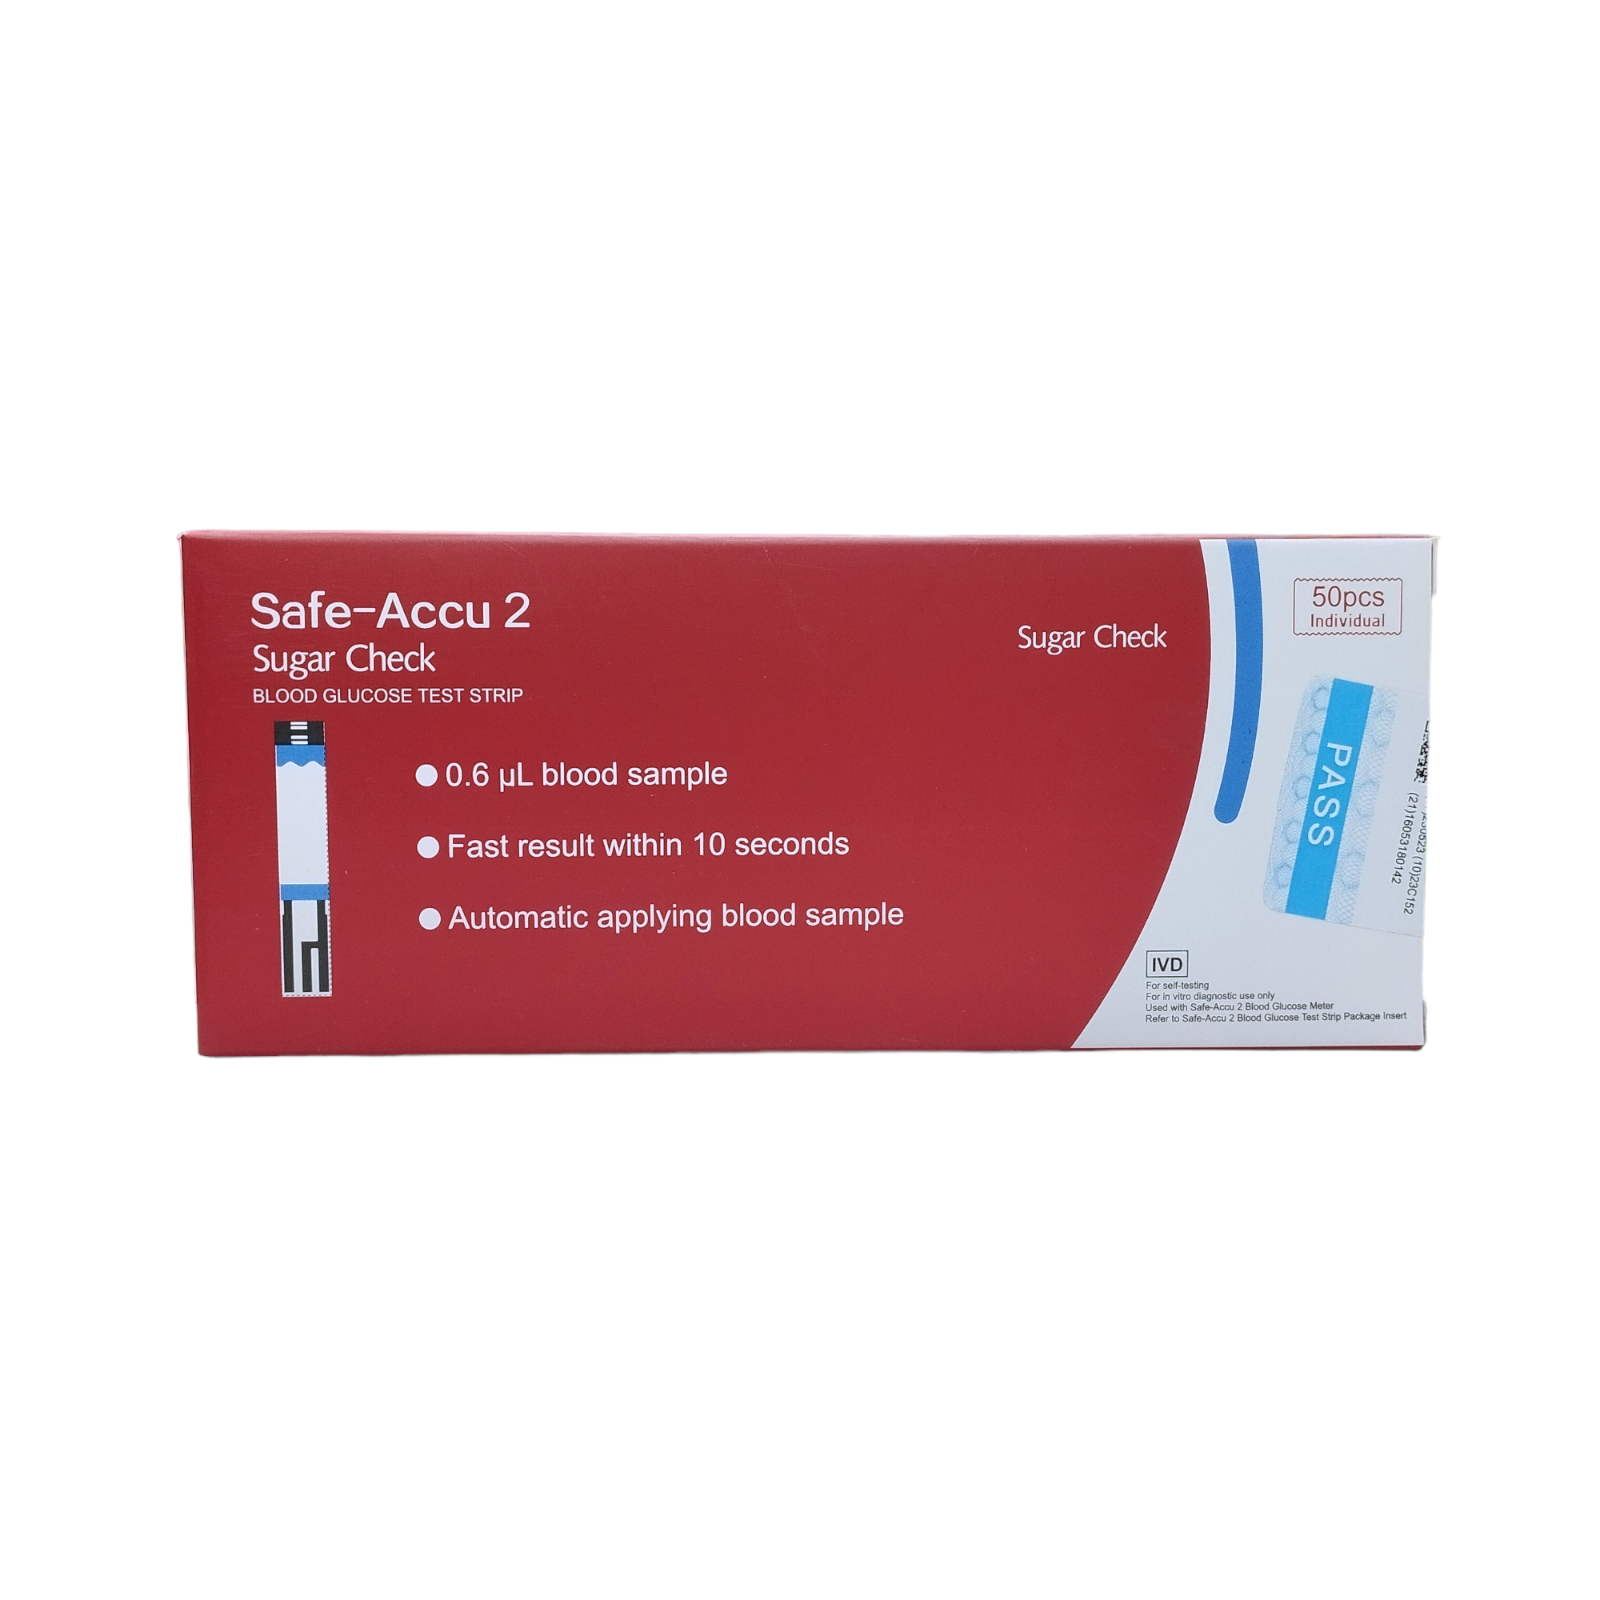 Safe-Accu 2 Sugar Check Blood Glucose Test Strips